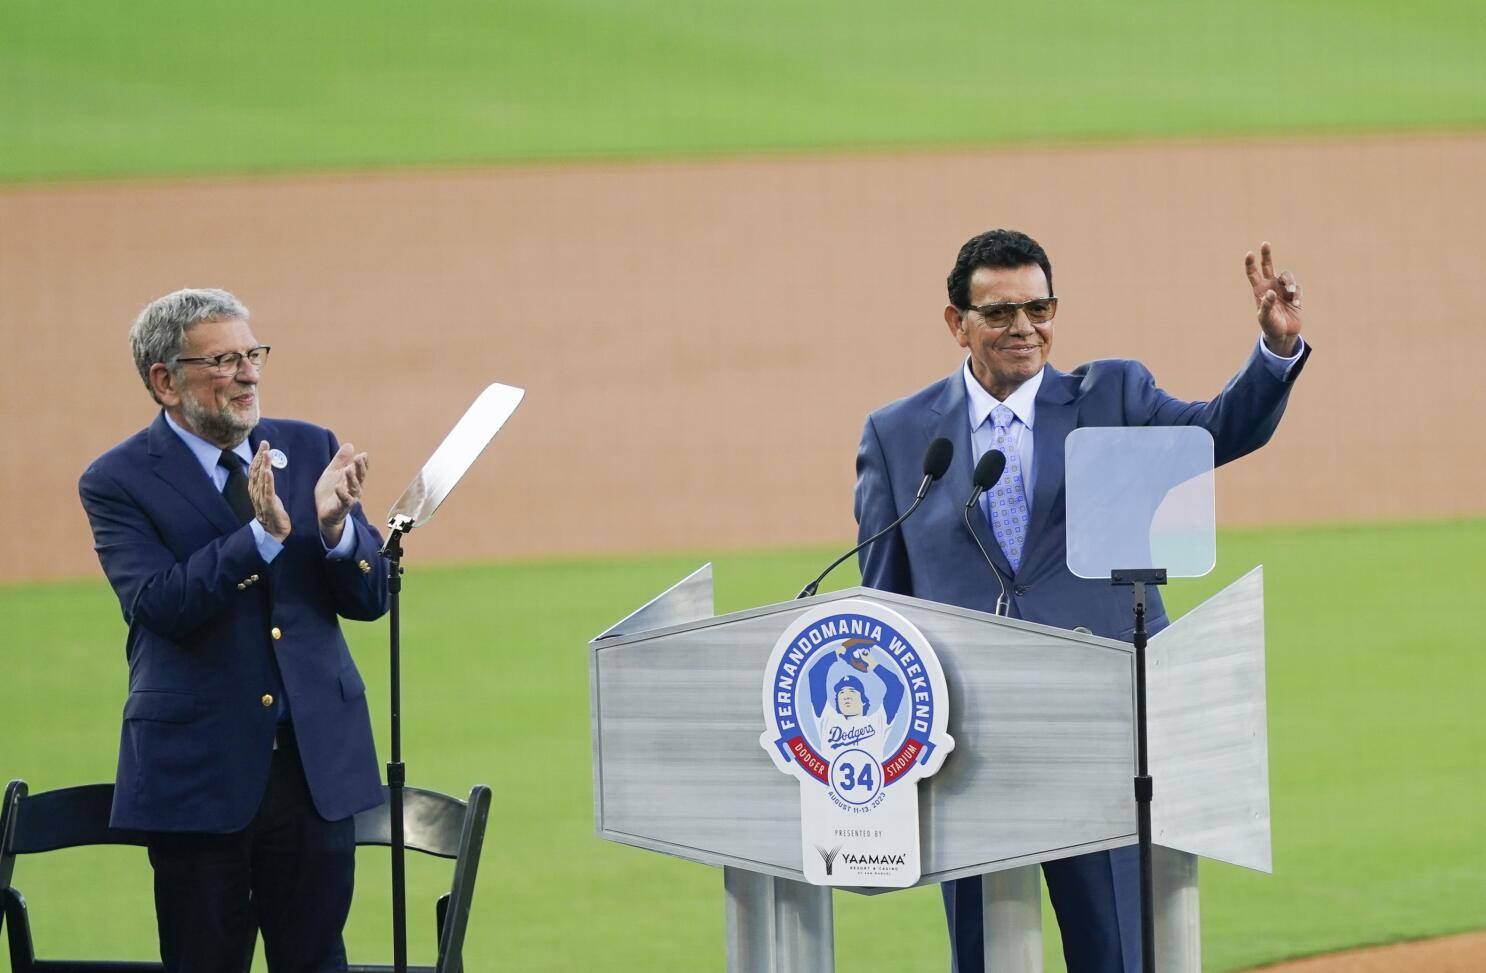 Fernando Valenzuela will finally be immortalized in Dodgers history